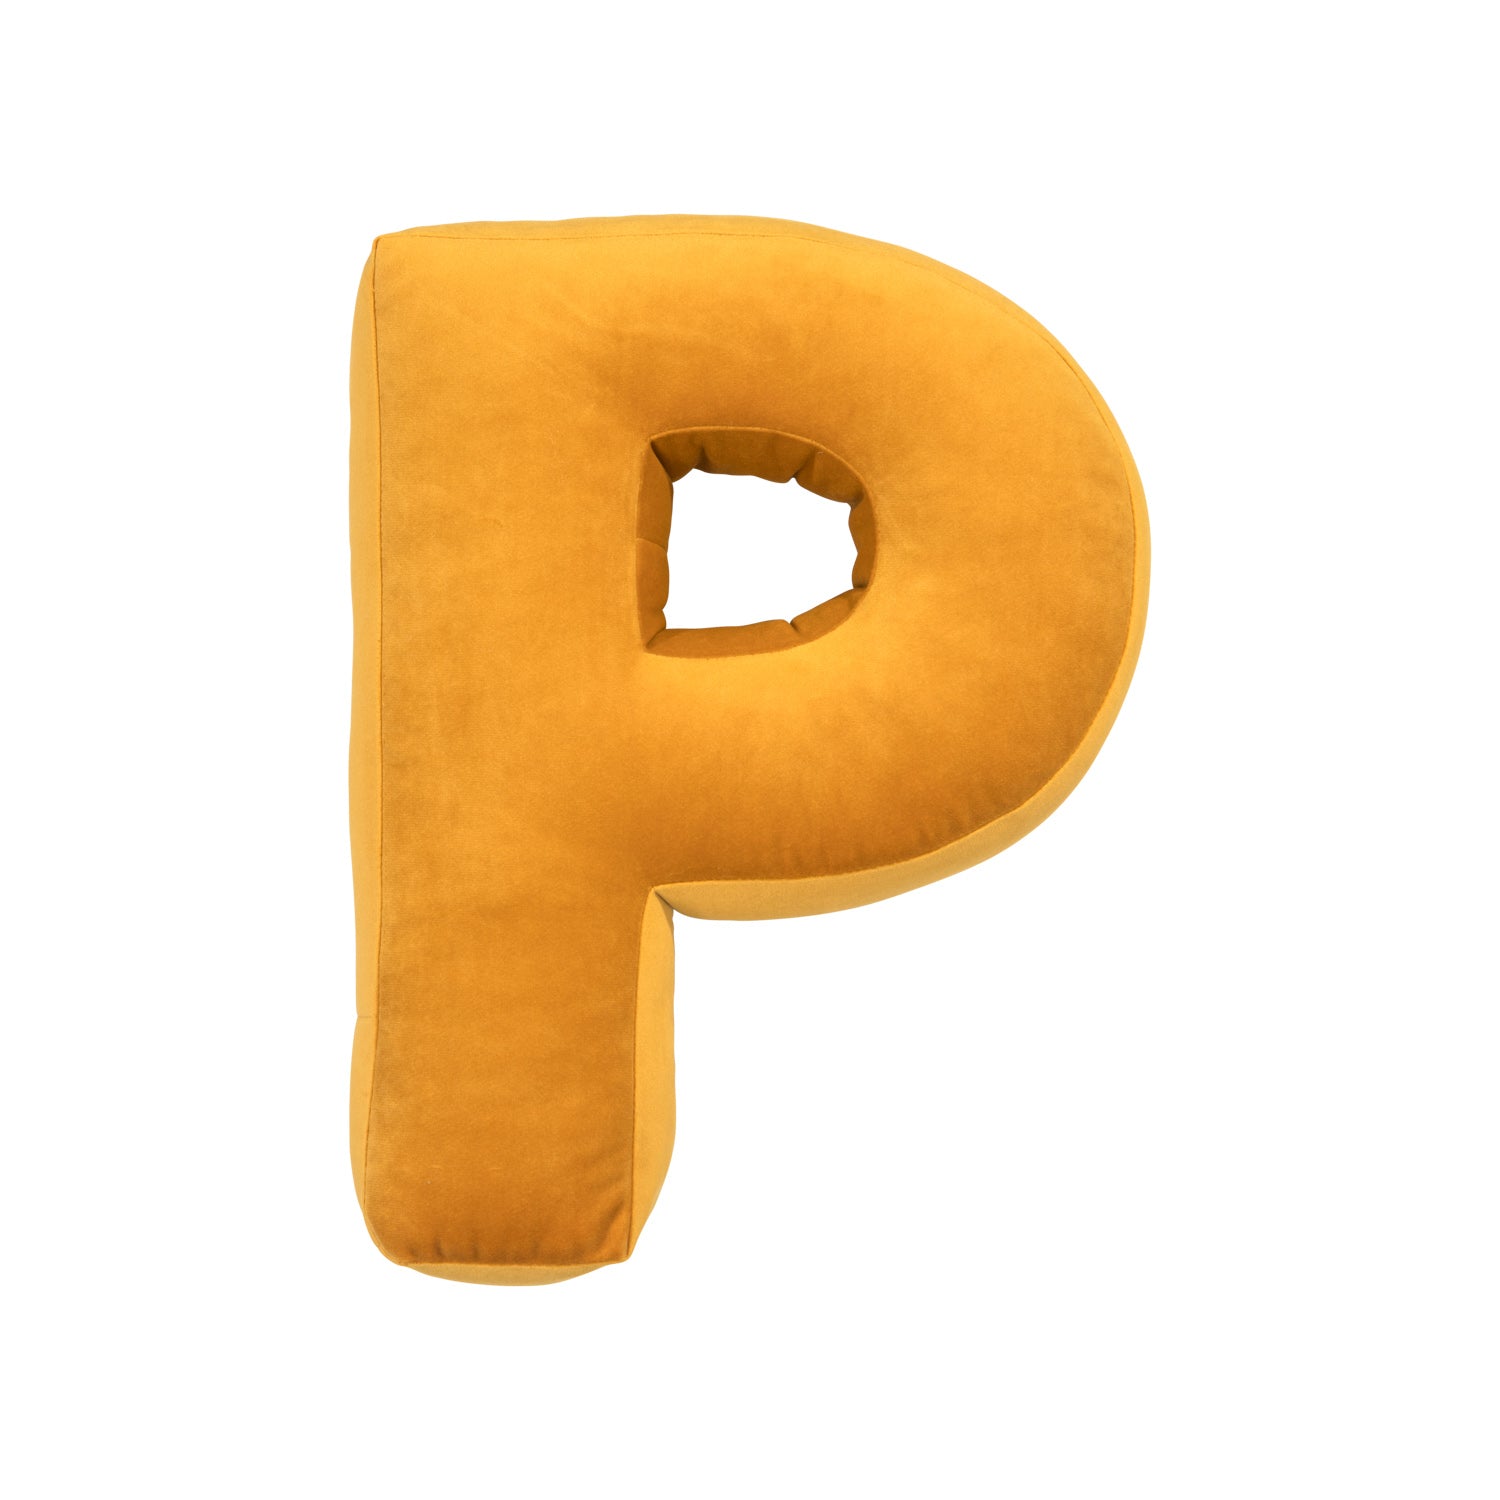 Poduszka literka welurowa P żółta od Bettys Home